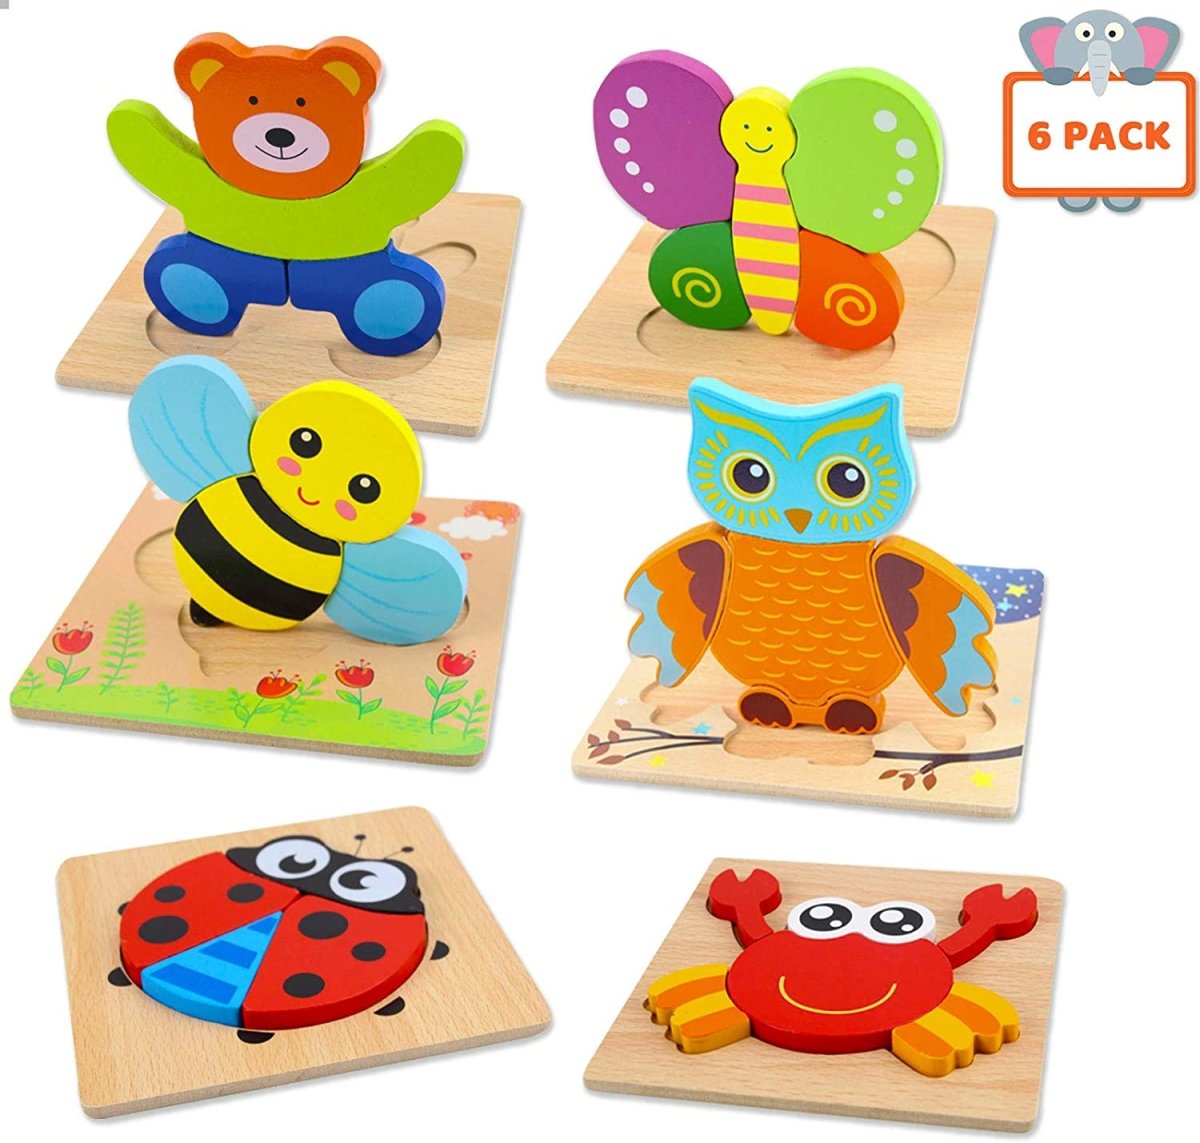 Project Montessori™ Animal Puzzles 6 PACK - Project Montessori